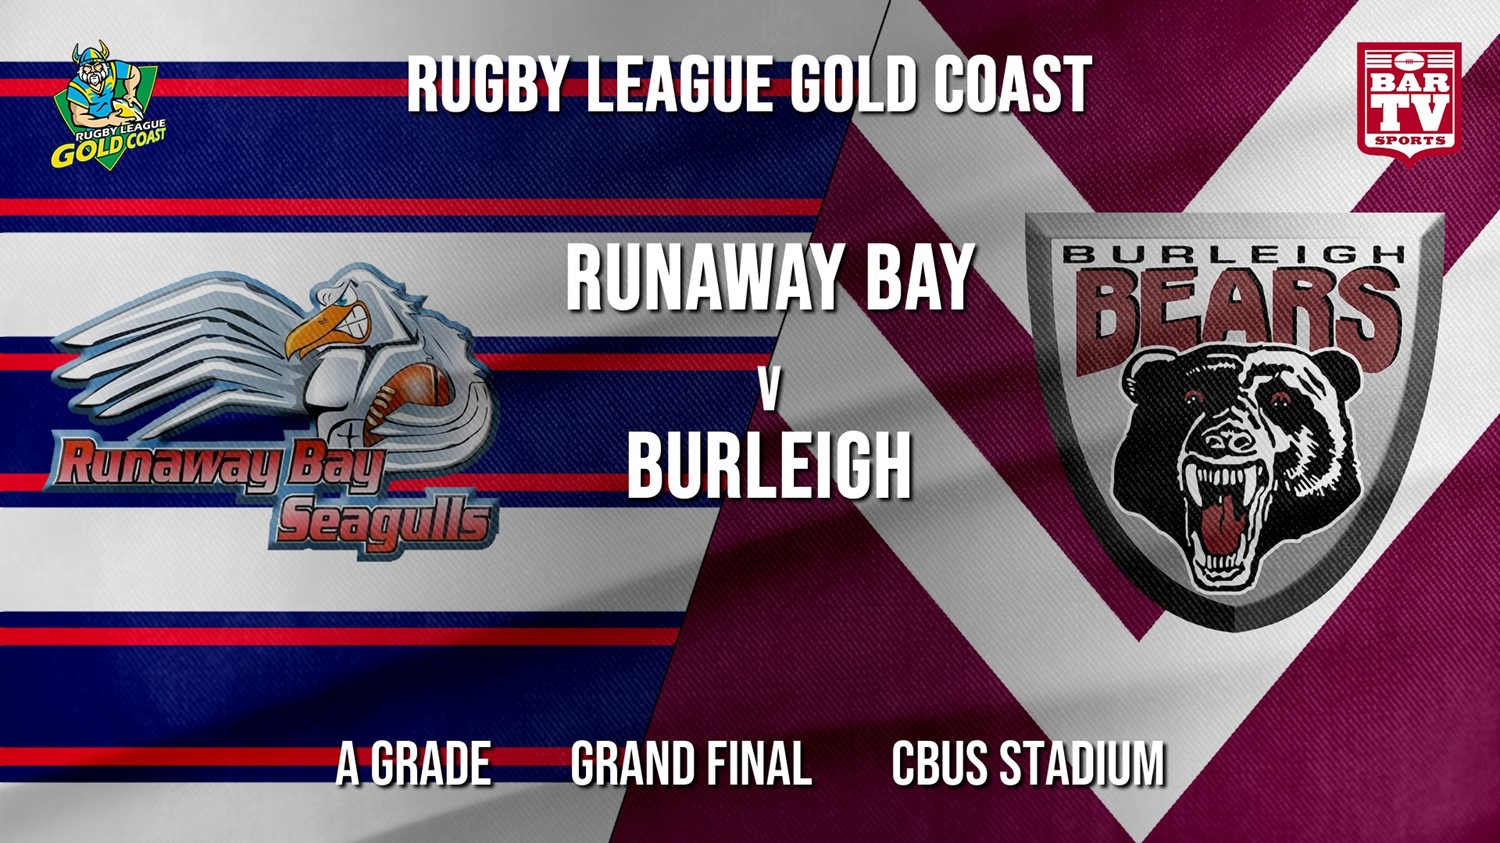 RLGC Grand Final - A Grade - Runaway Bay v Burleigh Bears Minigame Slate Image